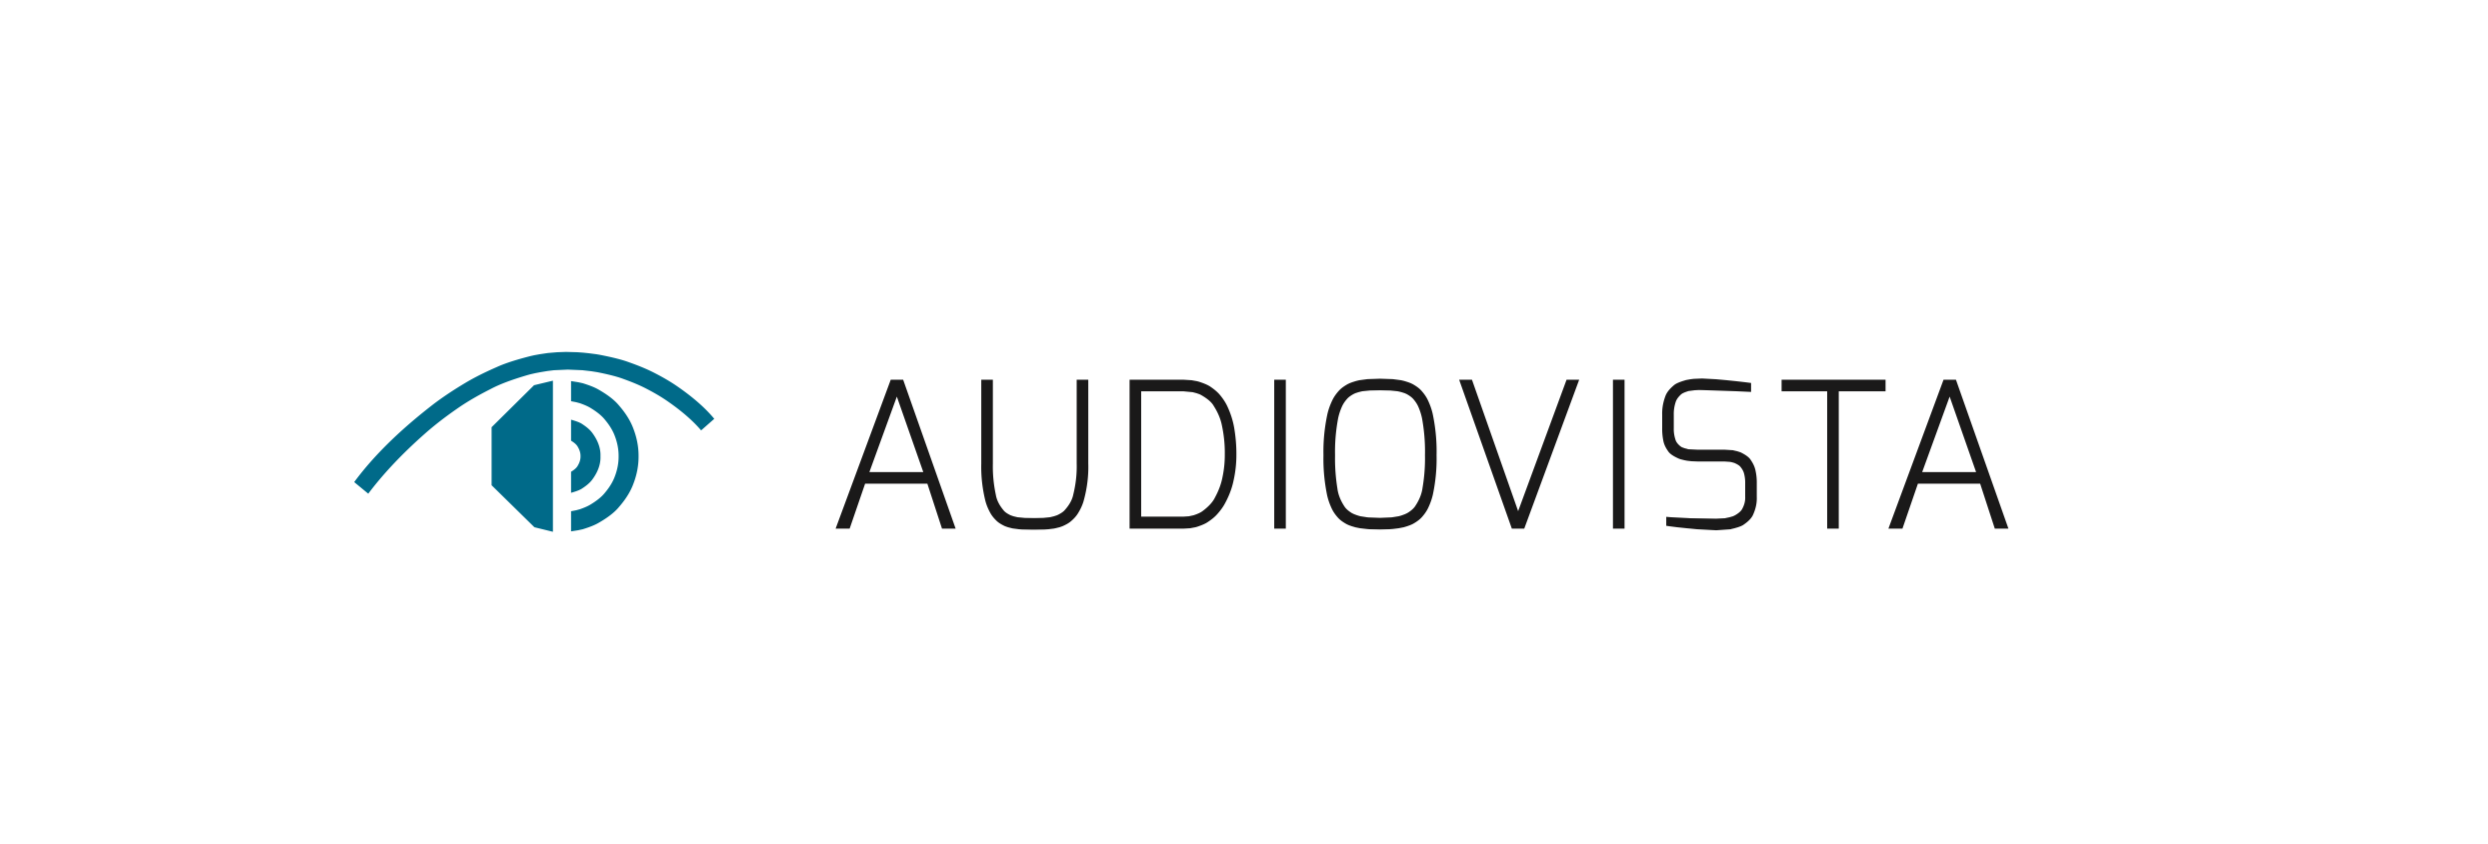 Audiovista.png